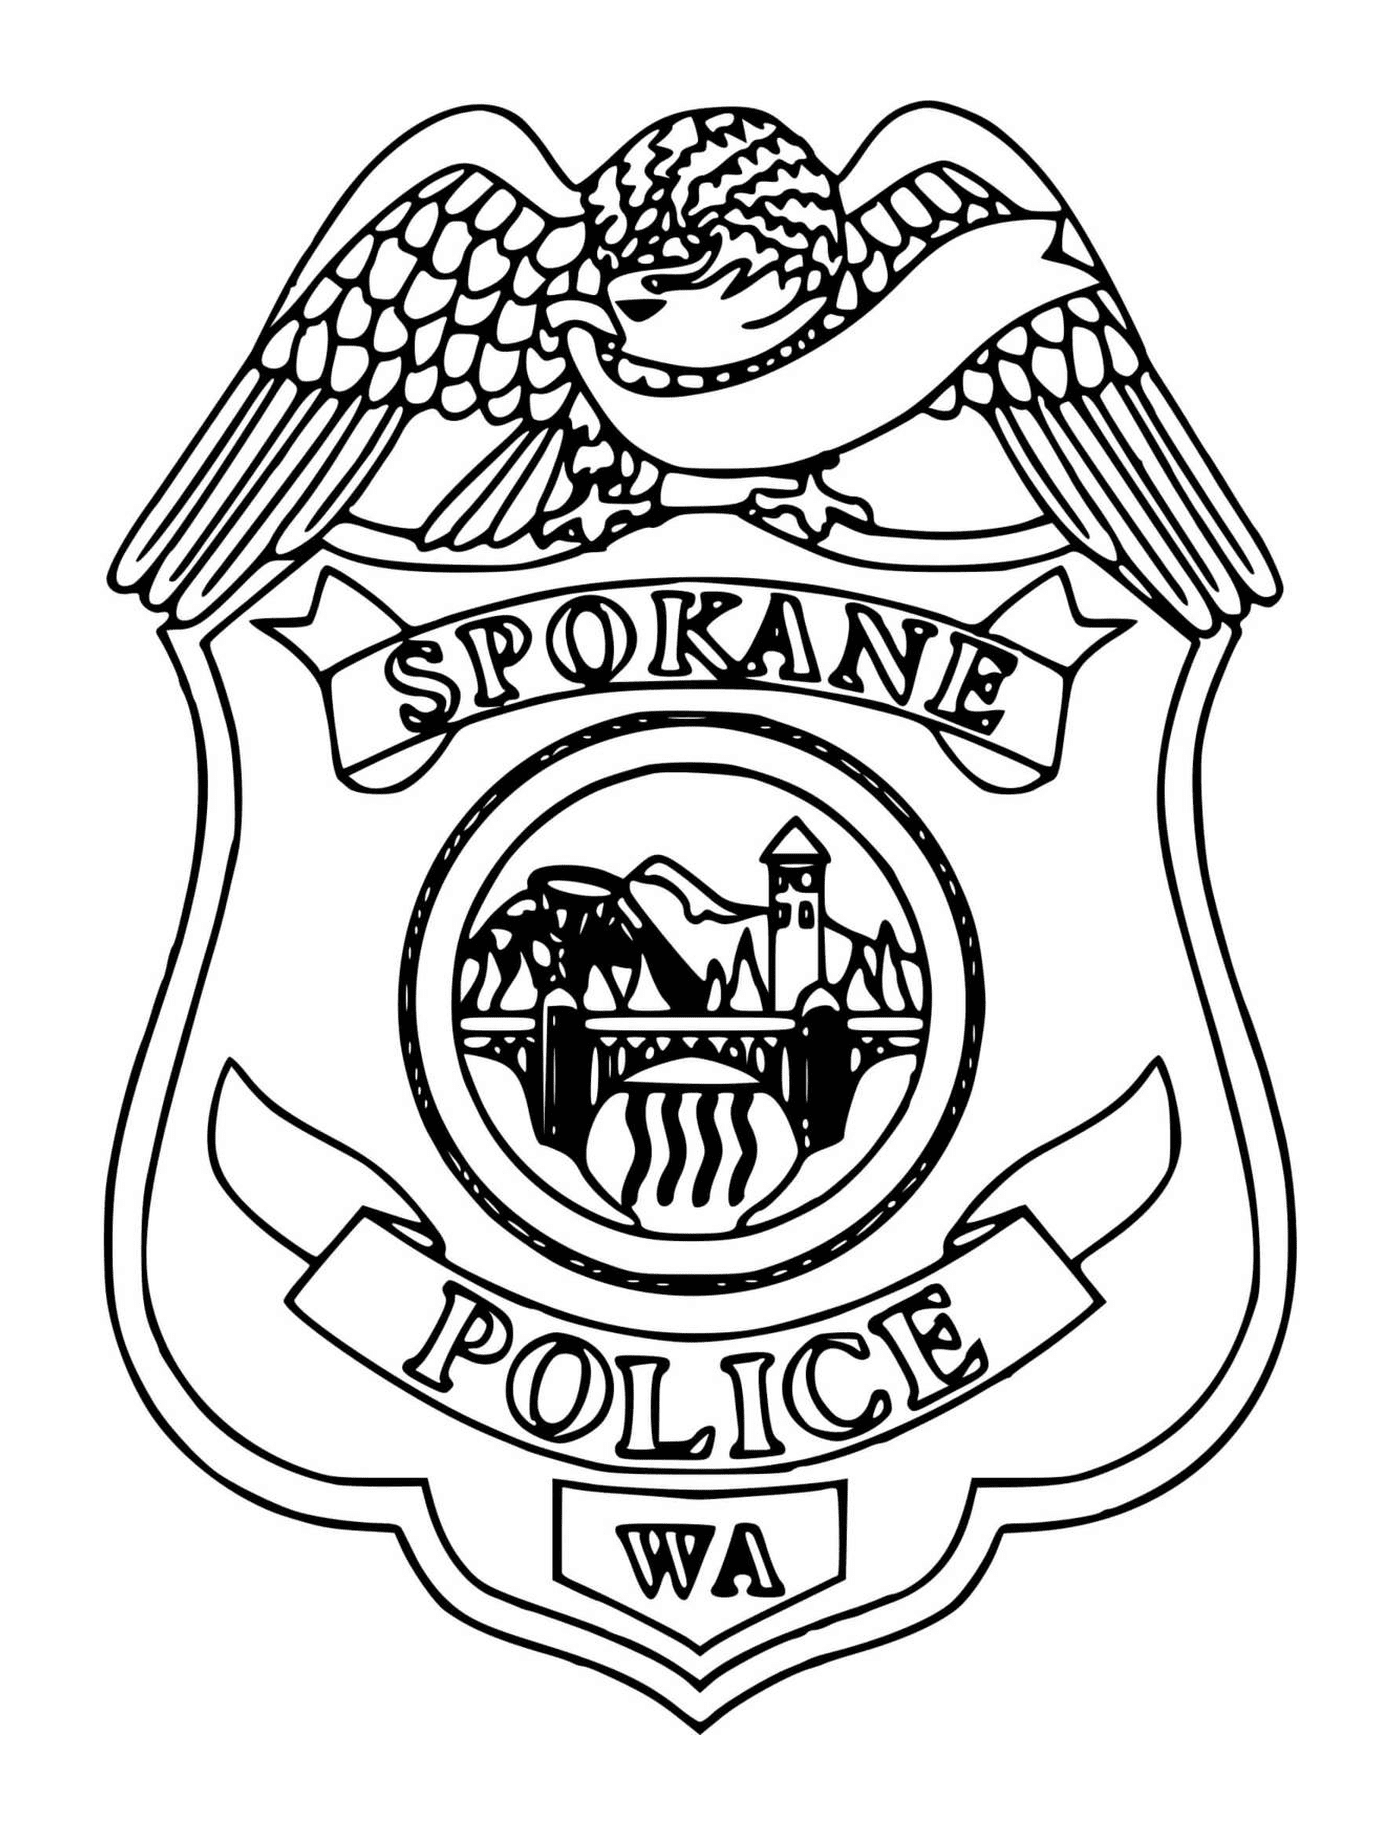  Spokane Polizeiabzeichen 